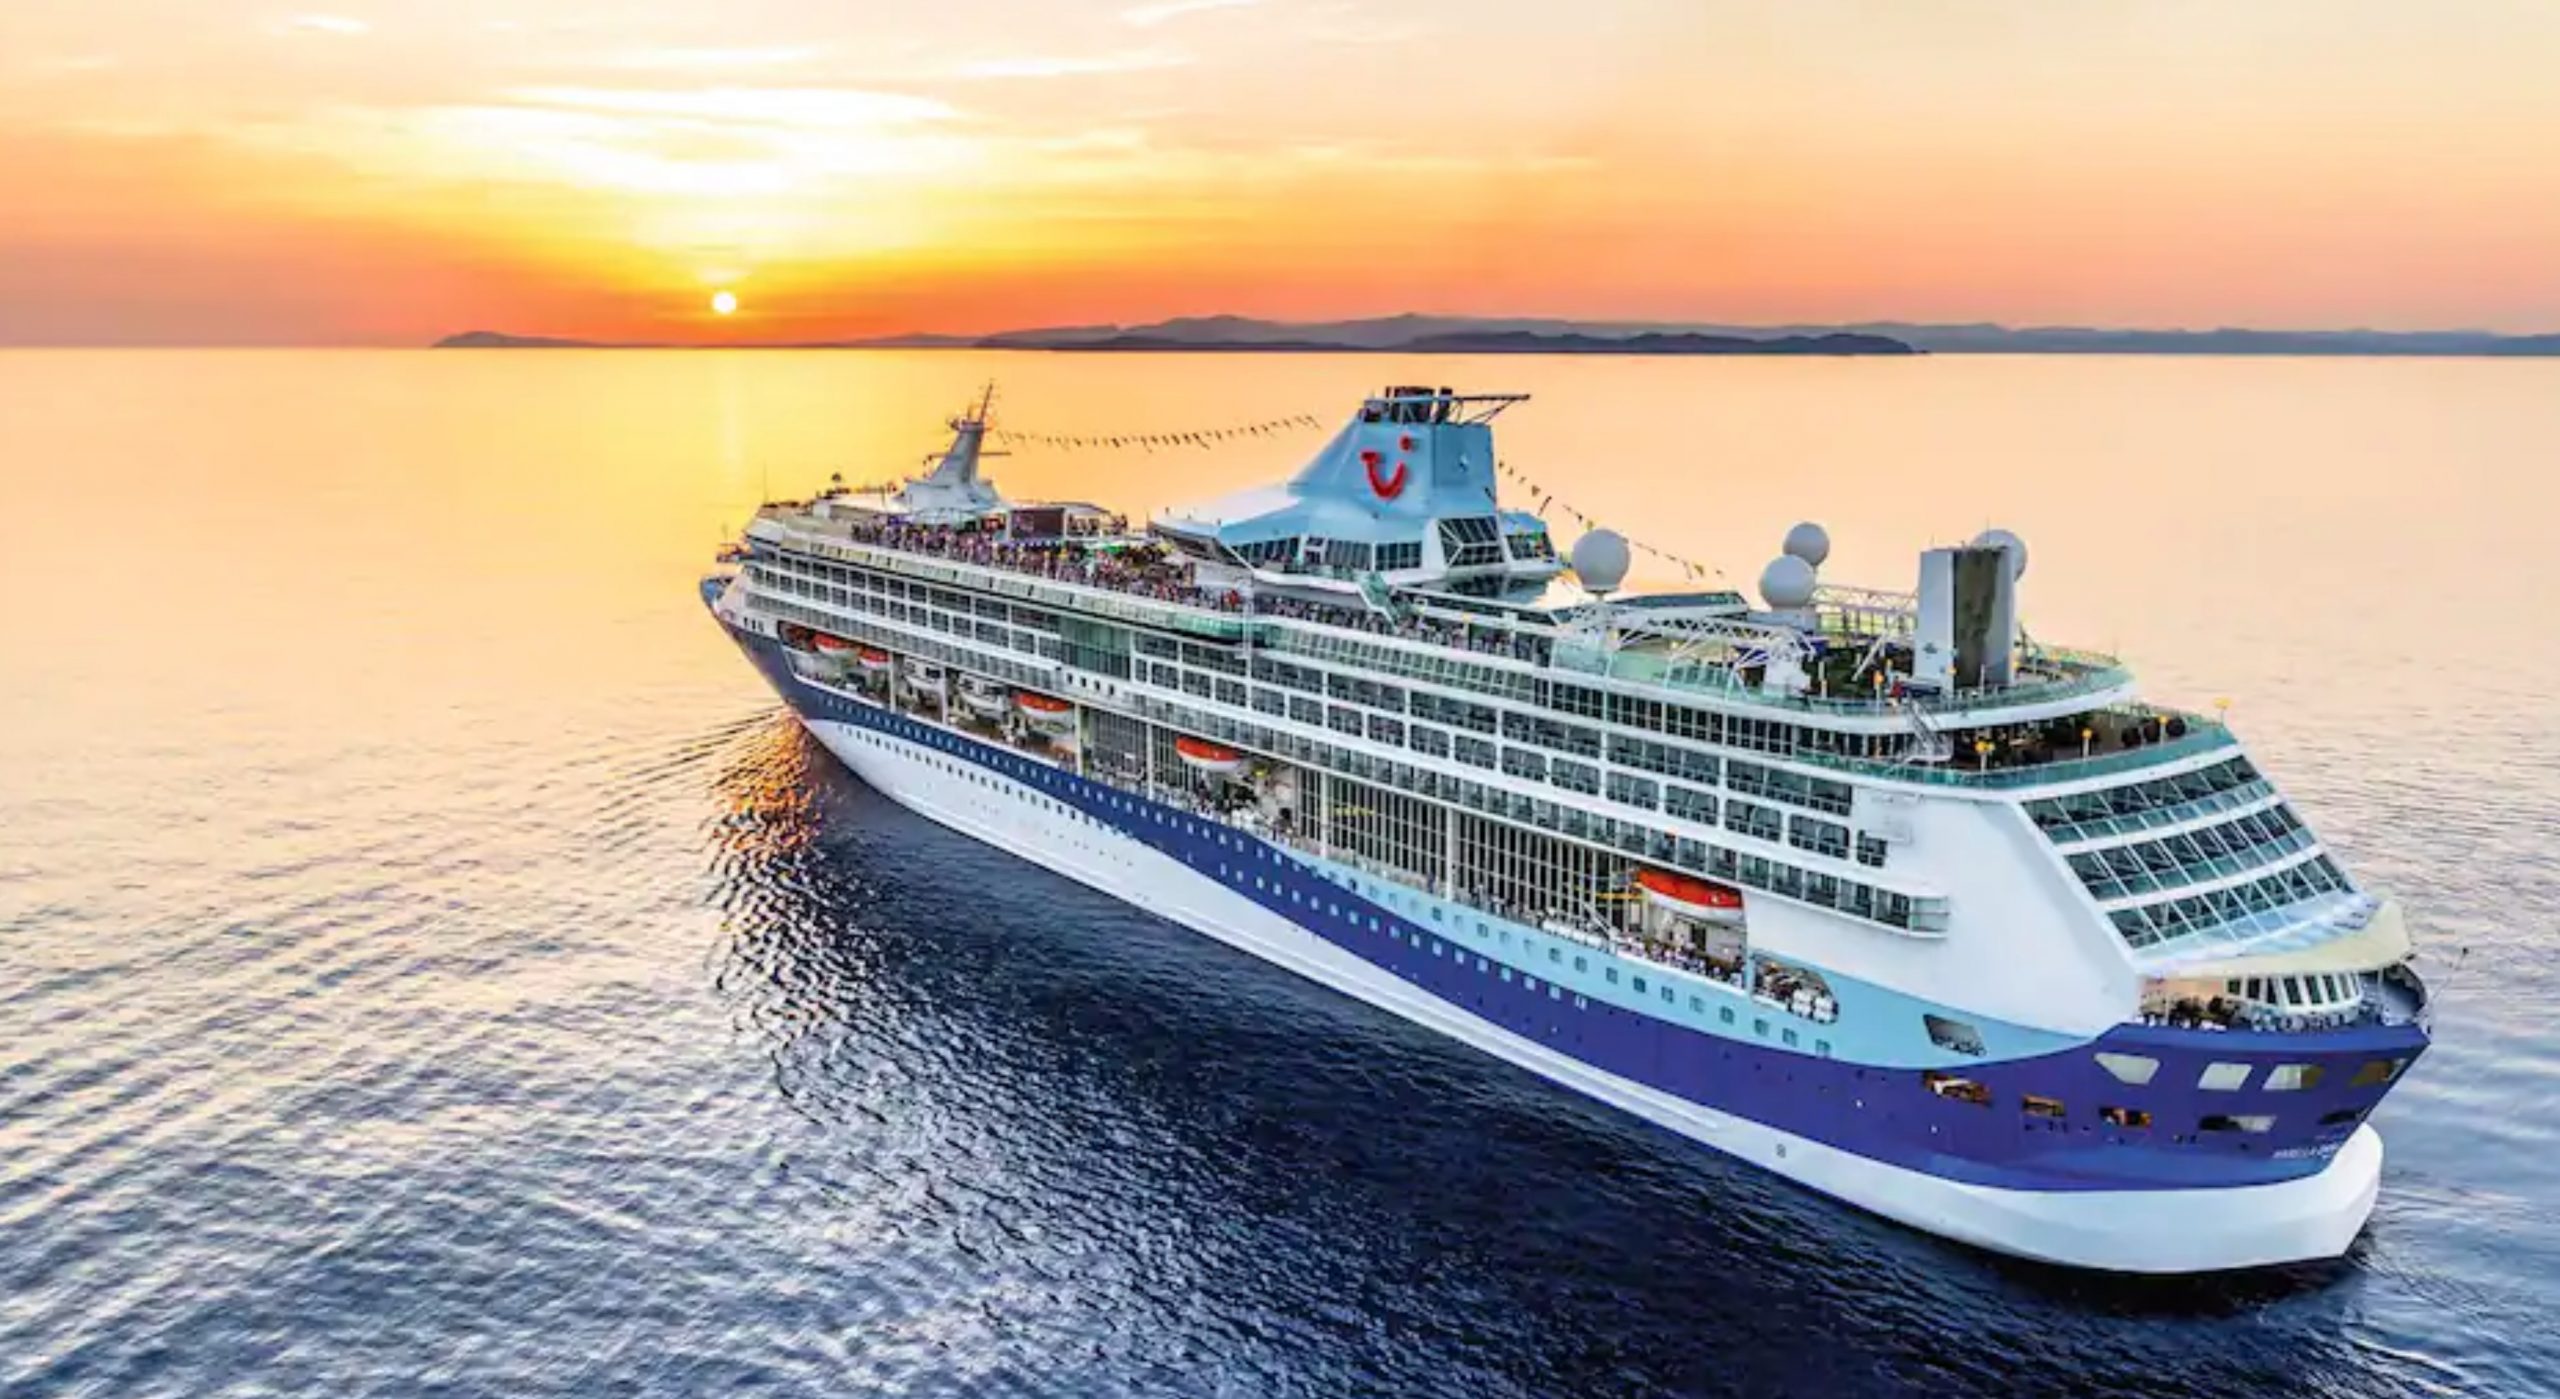 Marella cruise ship sailing into the sunset